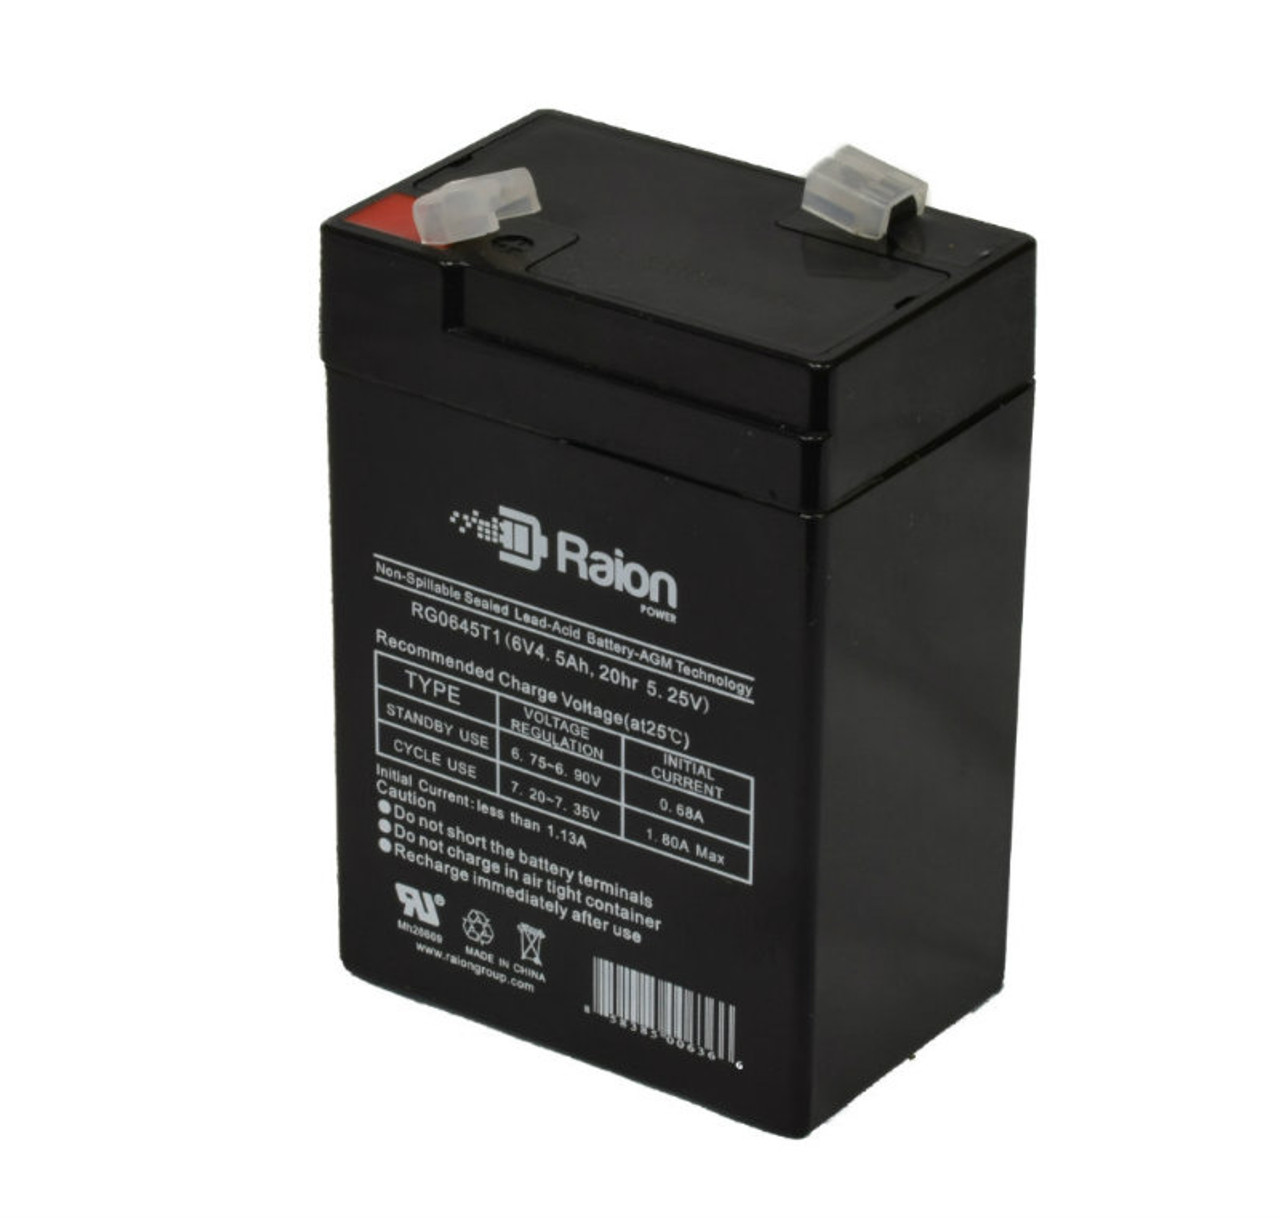 Raion Power RG0645T1 6V 4.5Ah Replacement Battery Cartridge for Ritar RT645